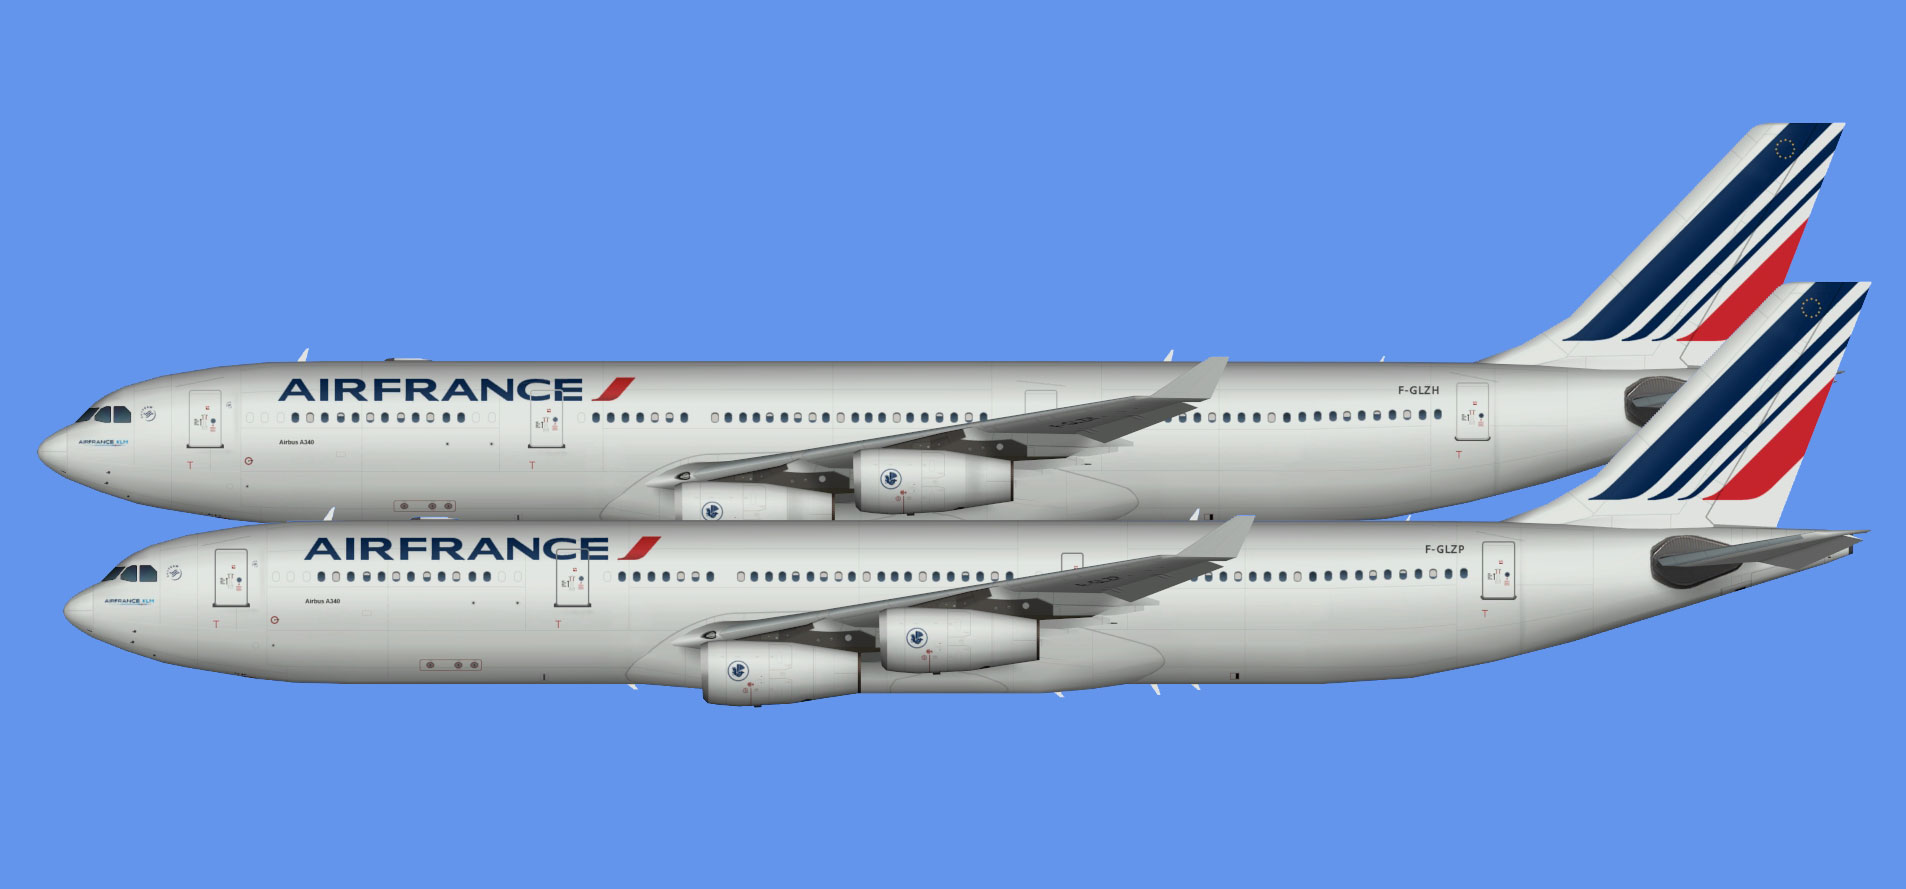 Air France A340 fleet (TFS)